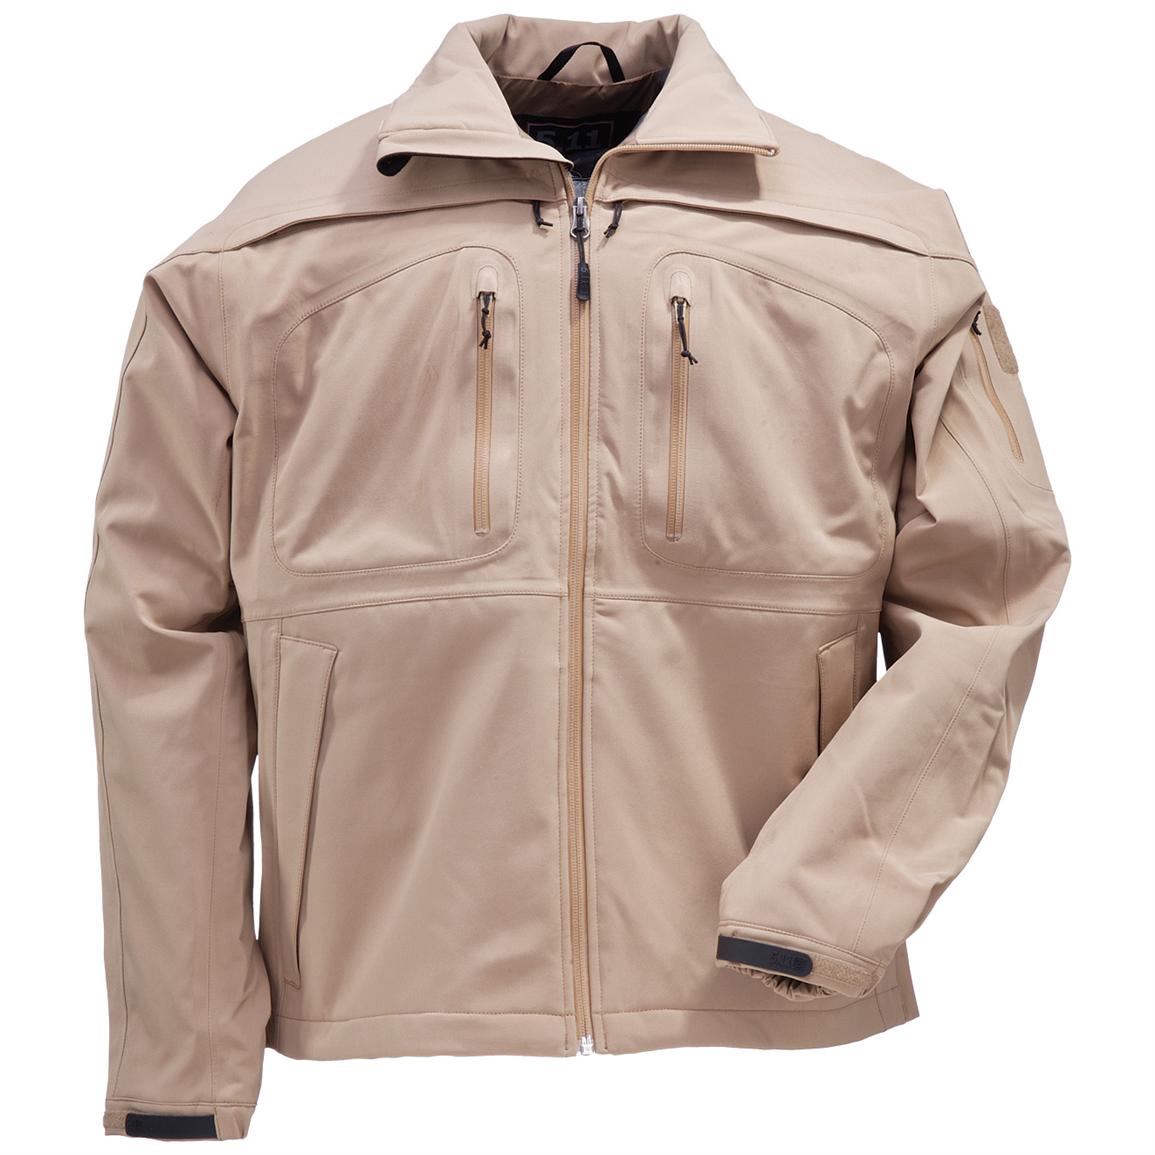 5.11 Tactical® Sabre Jacket - 165471, Tactical Clothing at Sportsman's ...